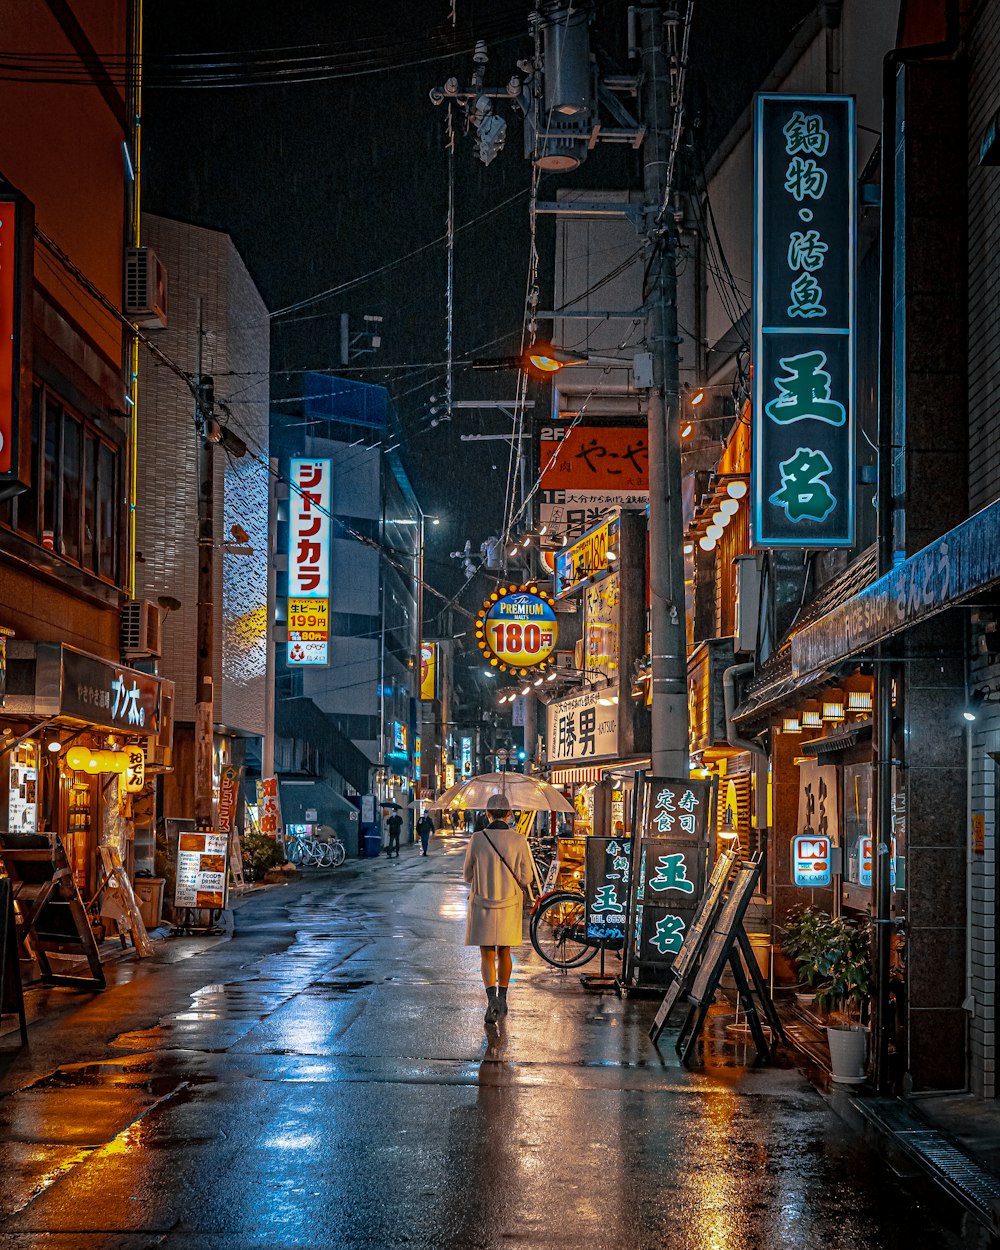 a person walking down a street in the rain